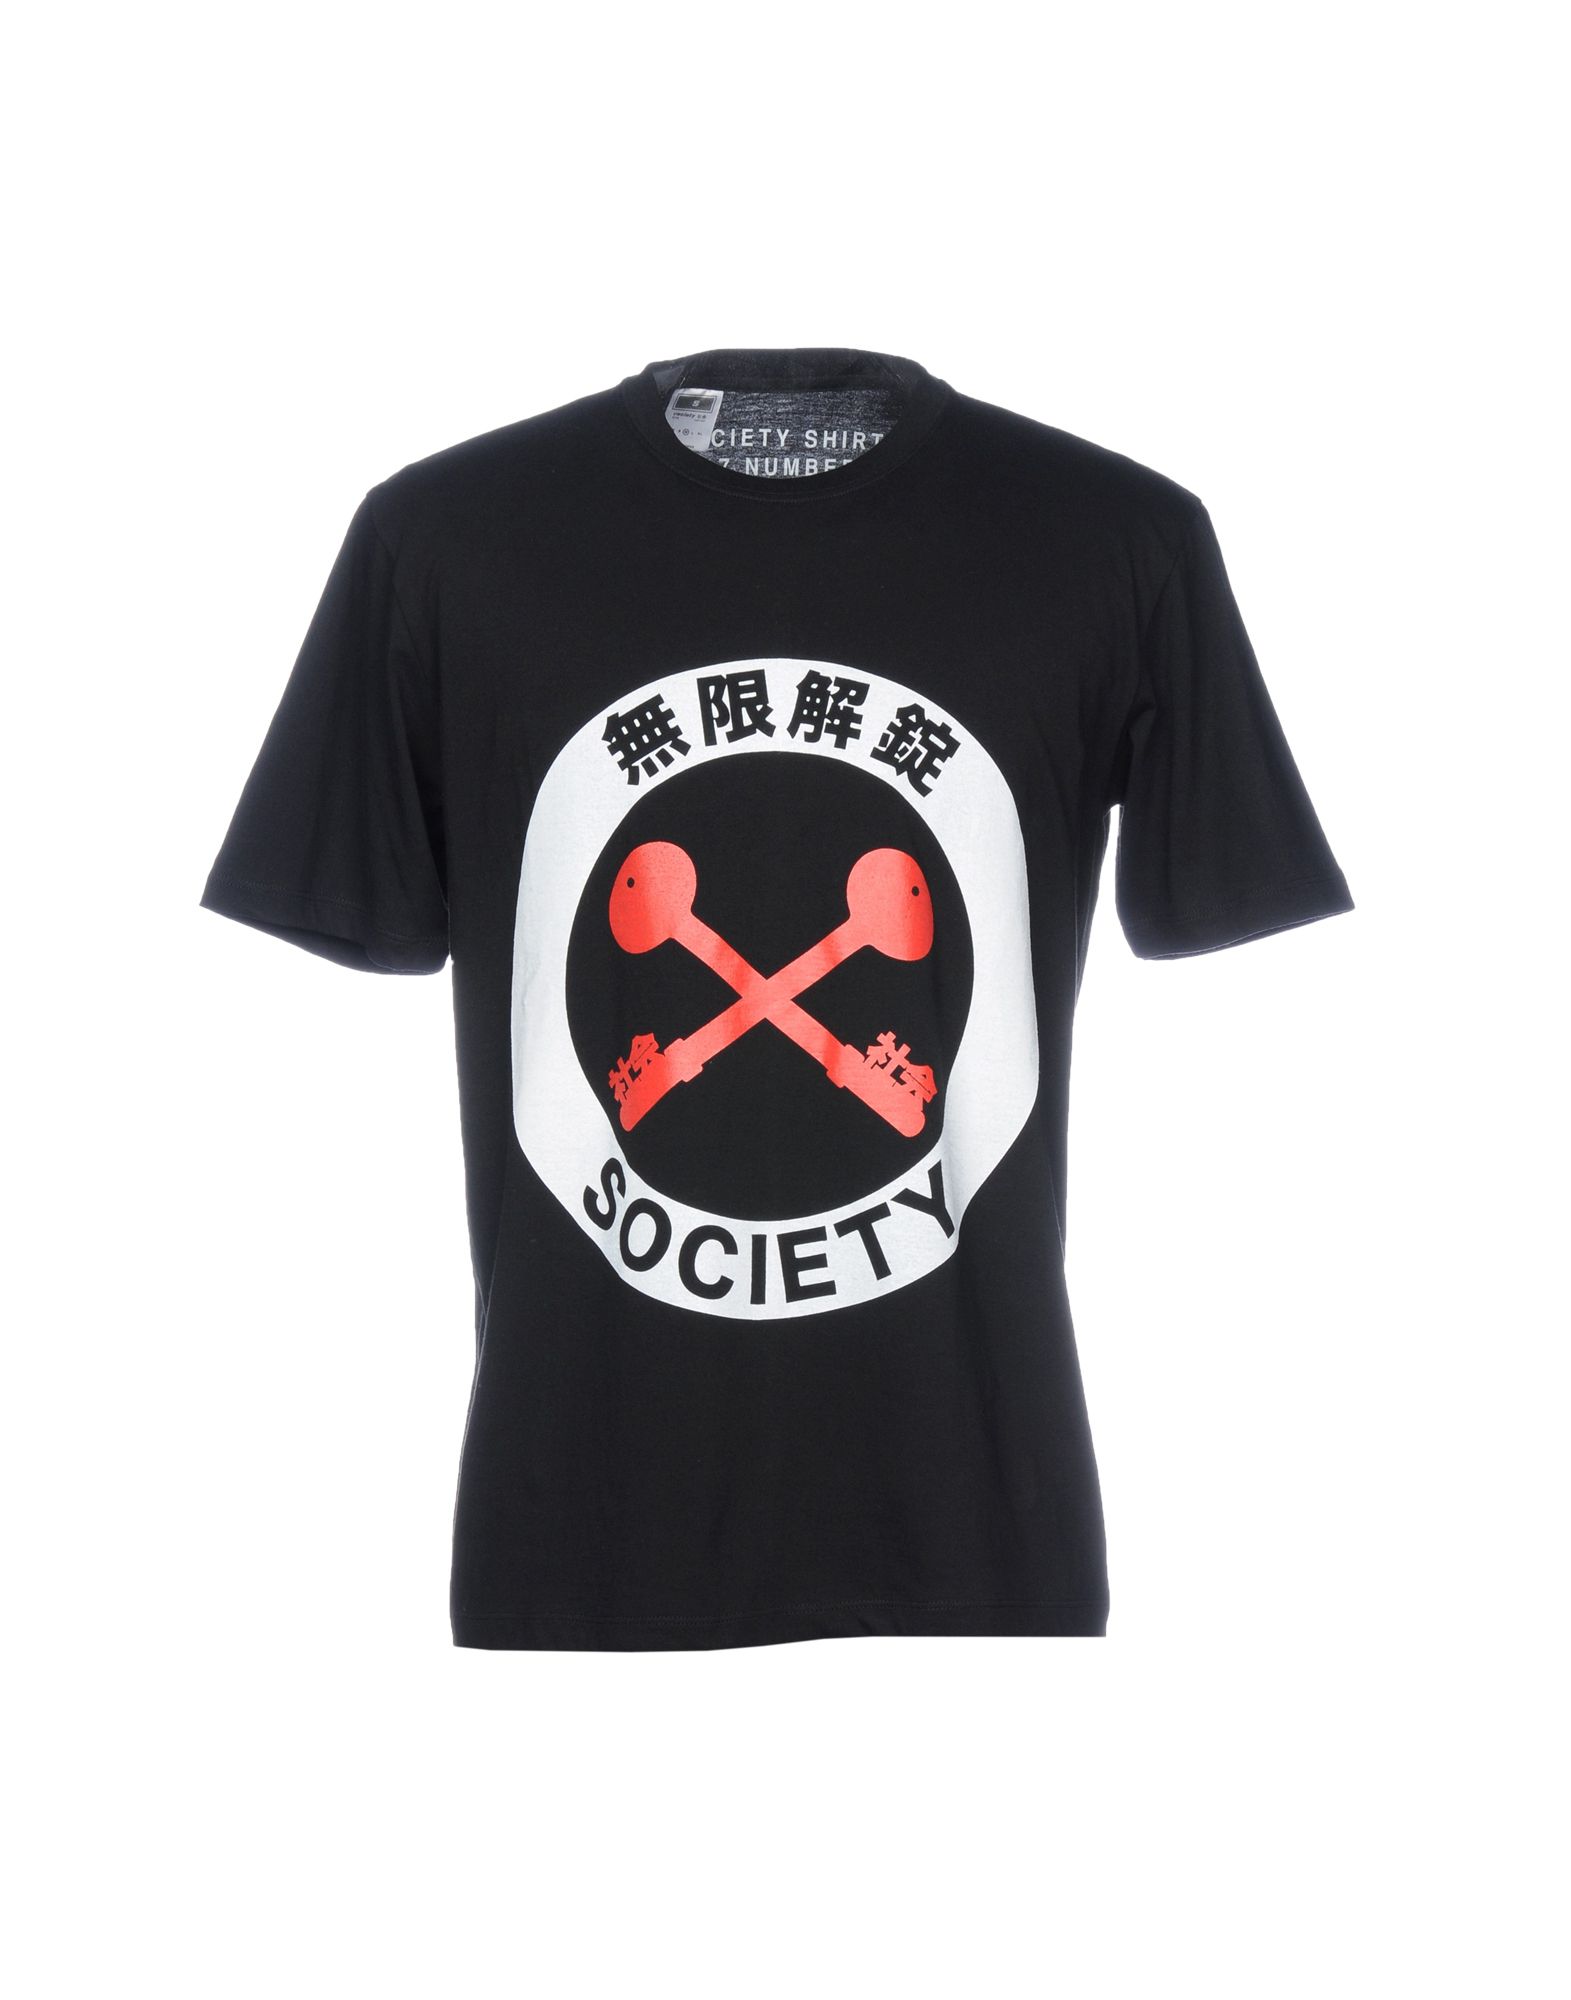 Pothead Society футболка. Kaotiko Society футболка. Manto peaceful violence Society футболка. BPS одежда.